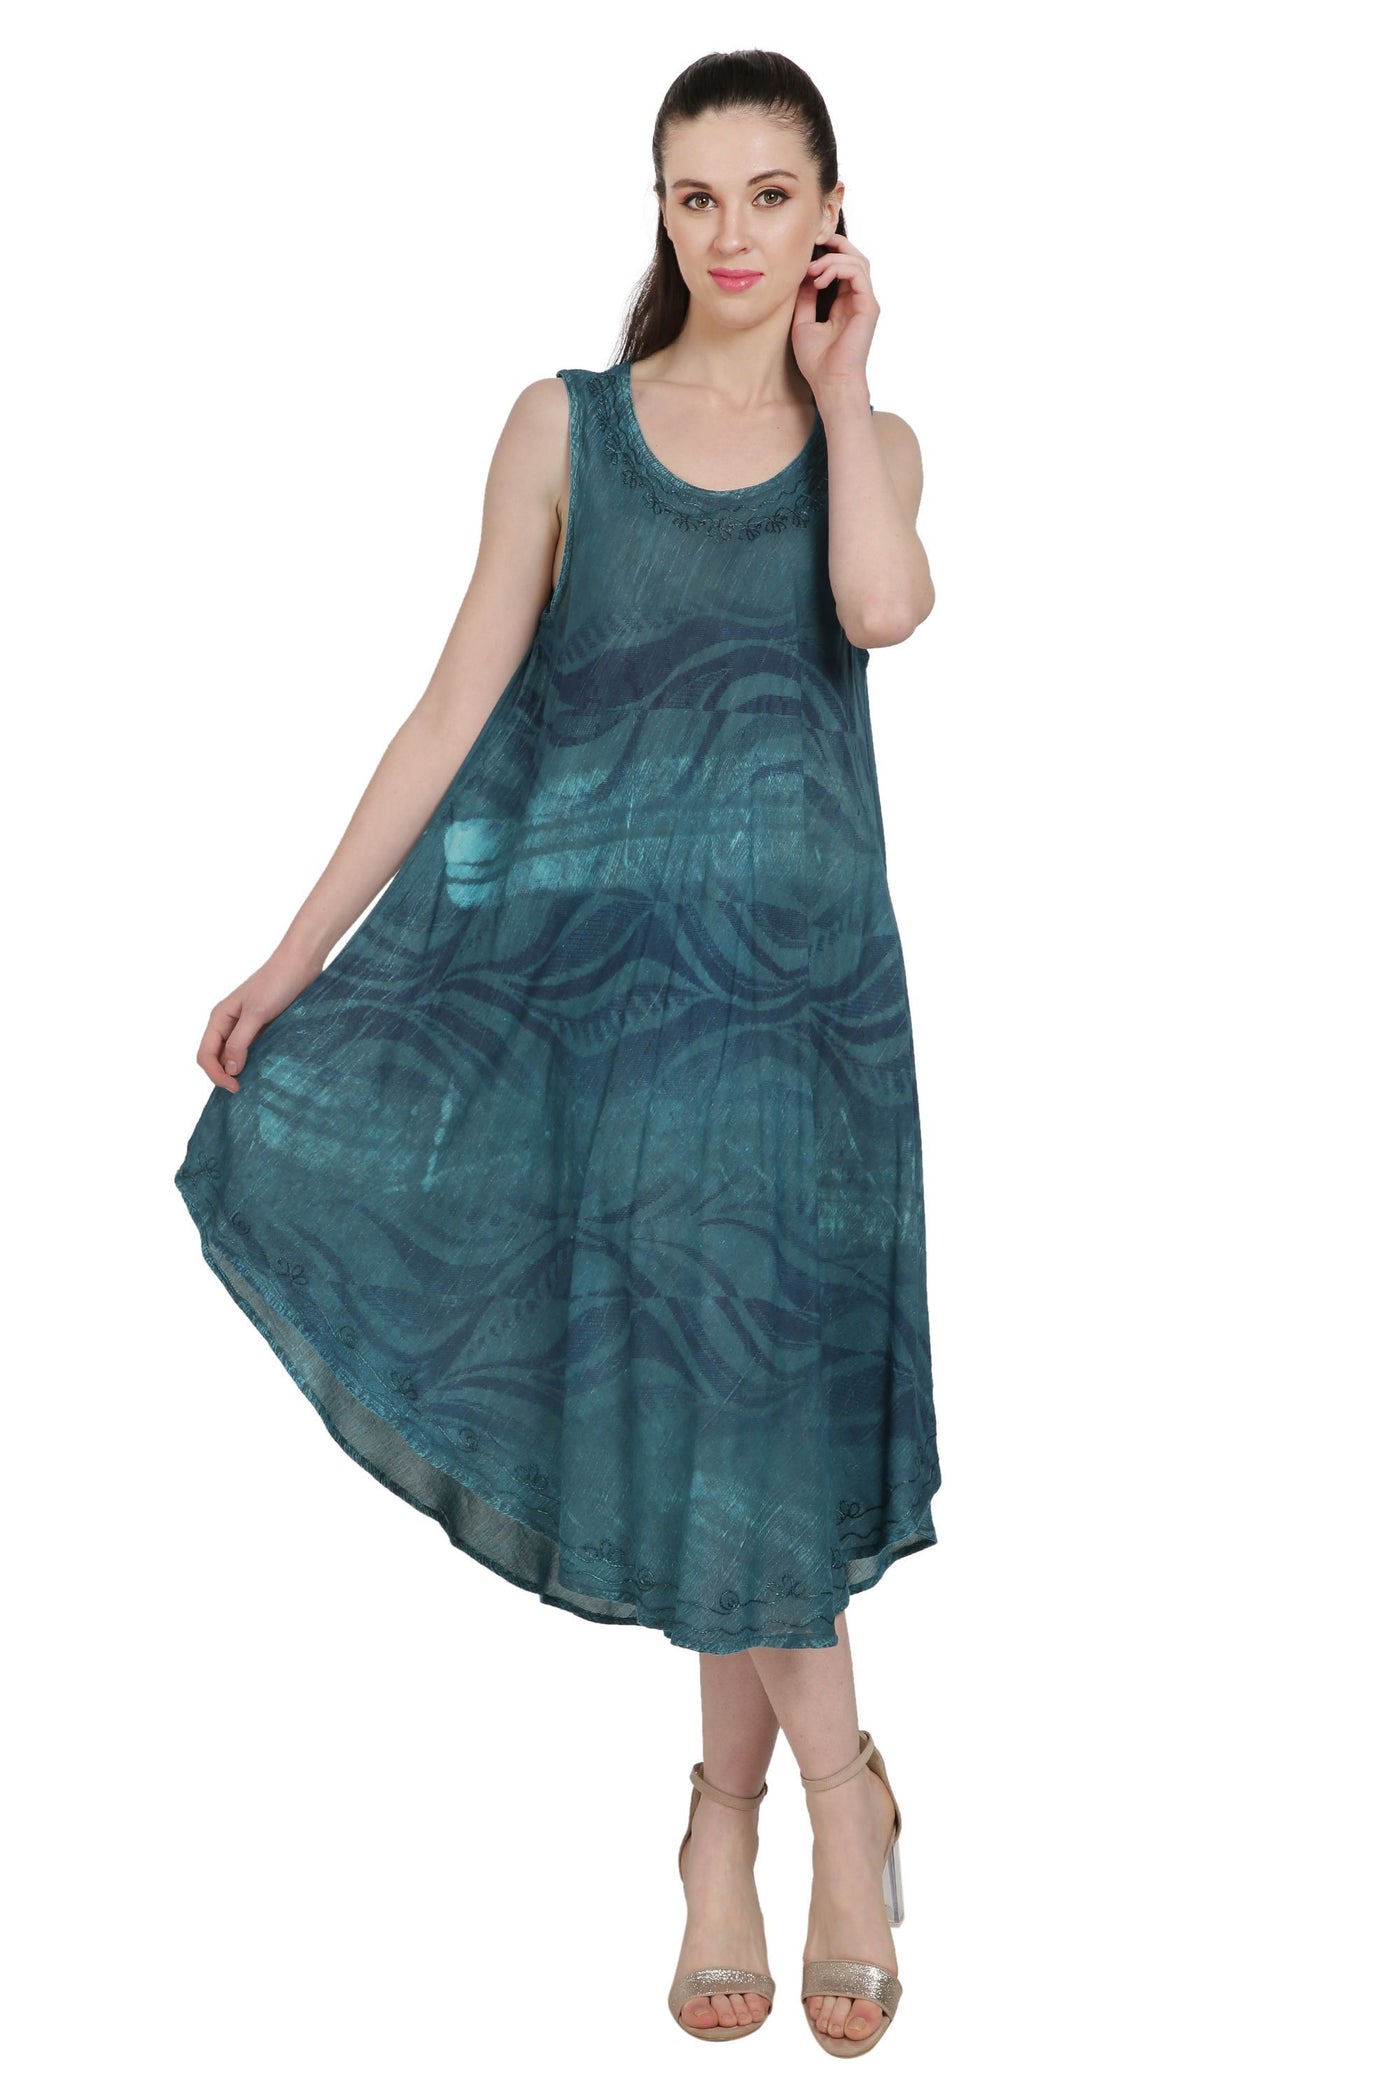 Block Print Tie Dye Umbrella Beach Dress UD48-2301